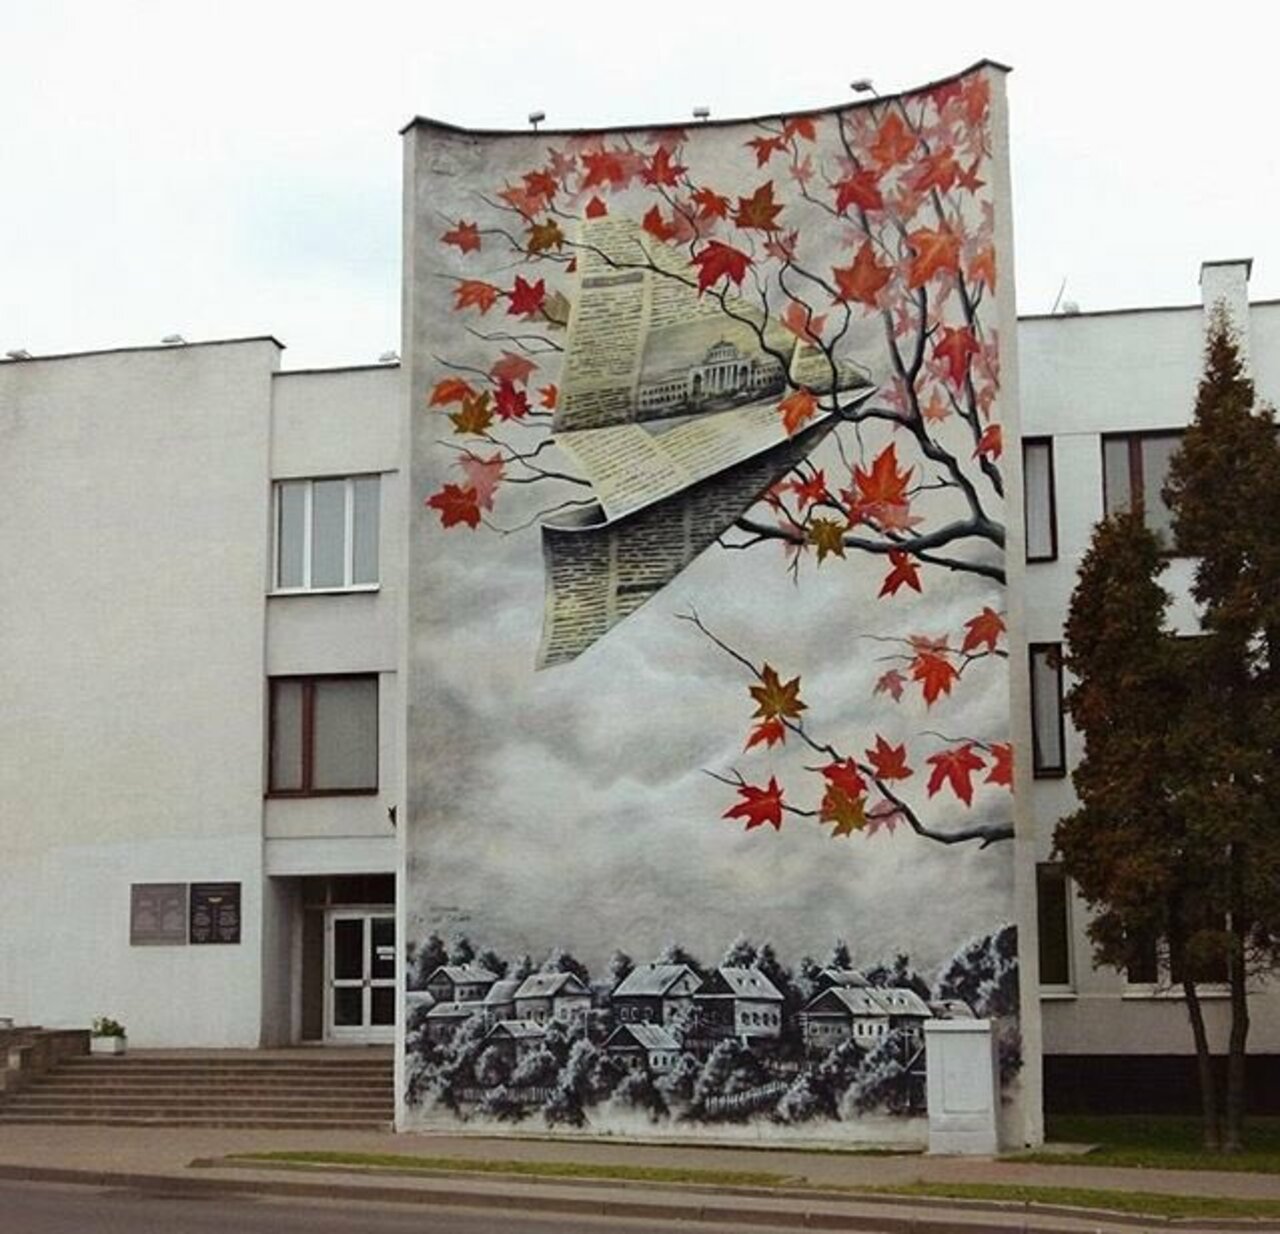 RT belilac "RT belilac "RT belilac "New Street Art by MUTUS in Belarus 

#art #graffiti #mural #streetart https://t.co/AGsyIY8nAV"""